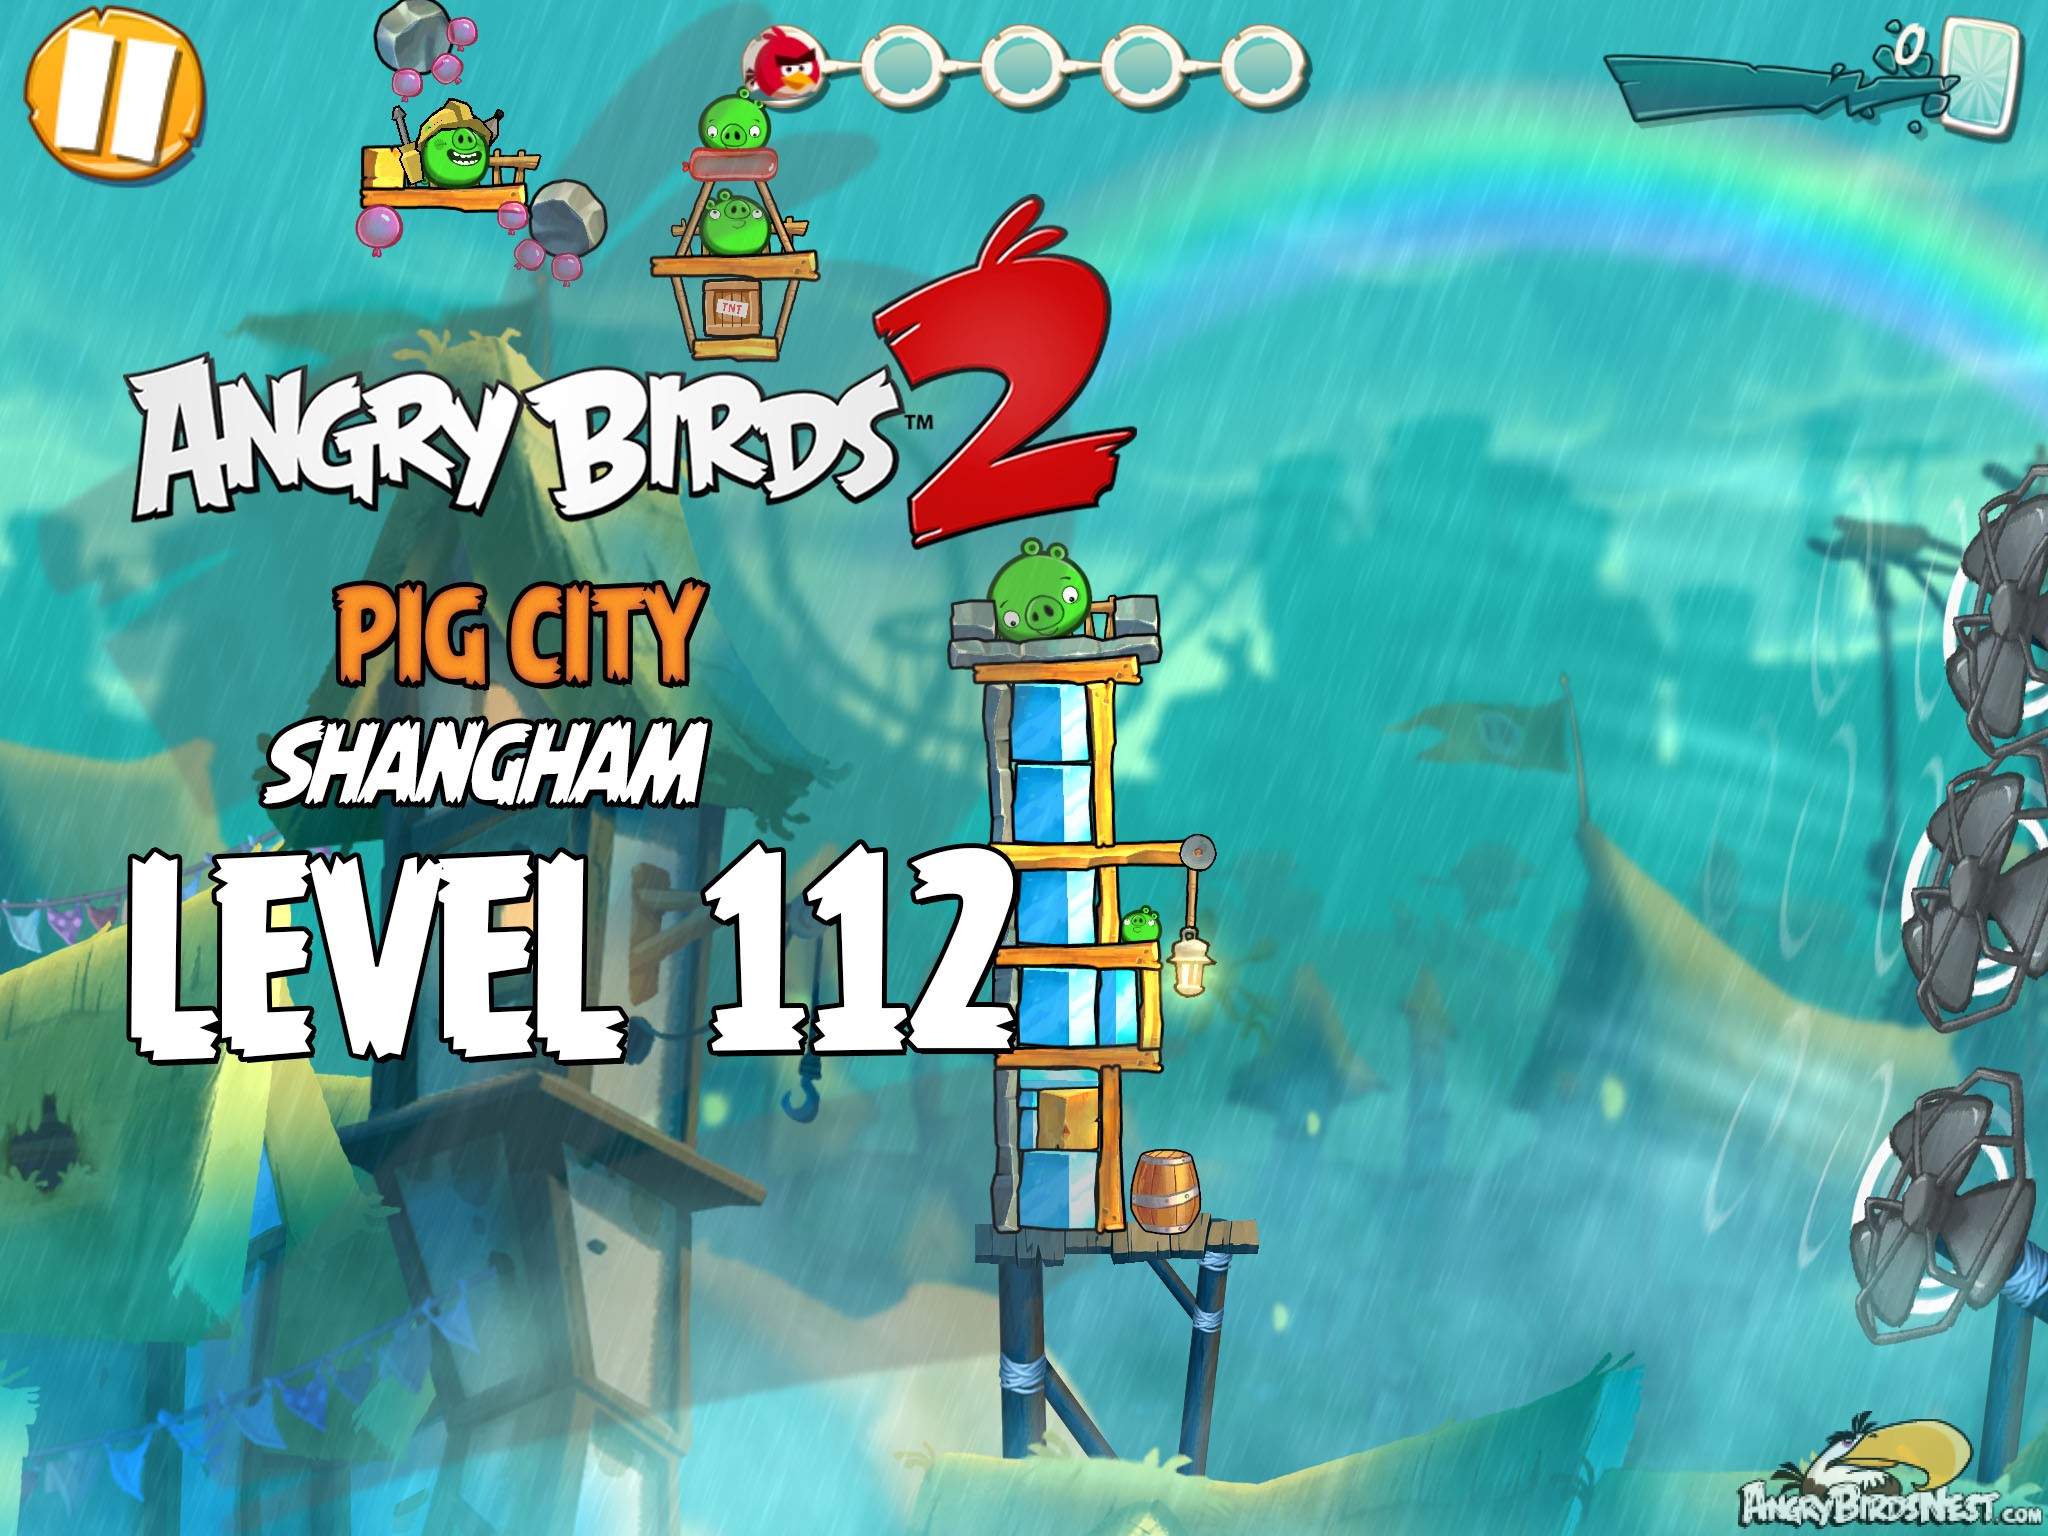 Angry Birds 2 Pig City Shangham Level 112